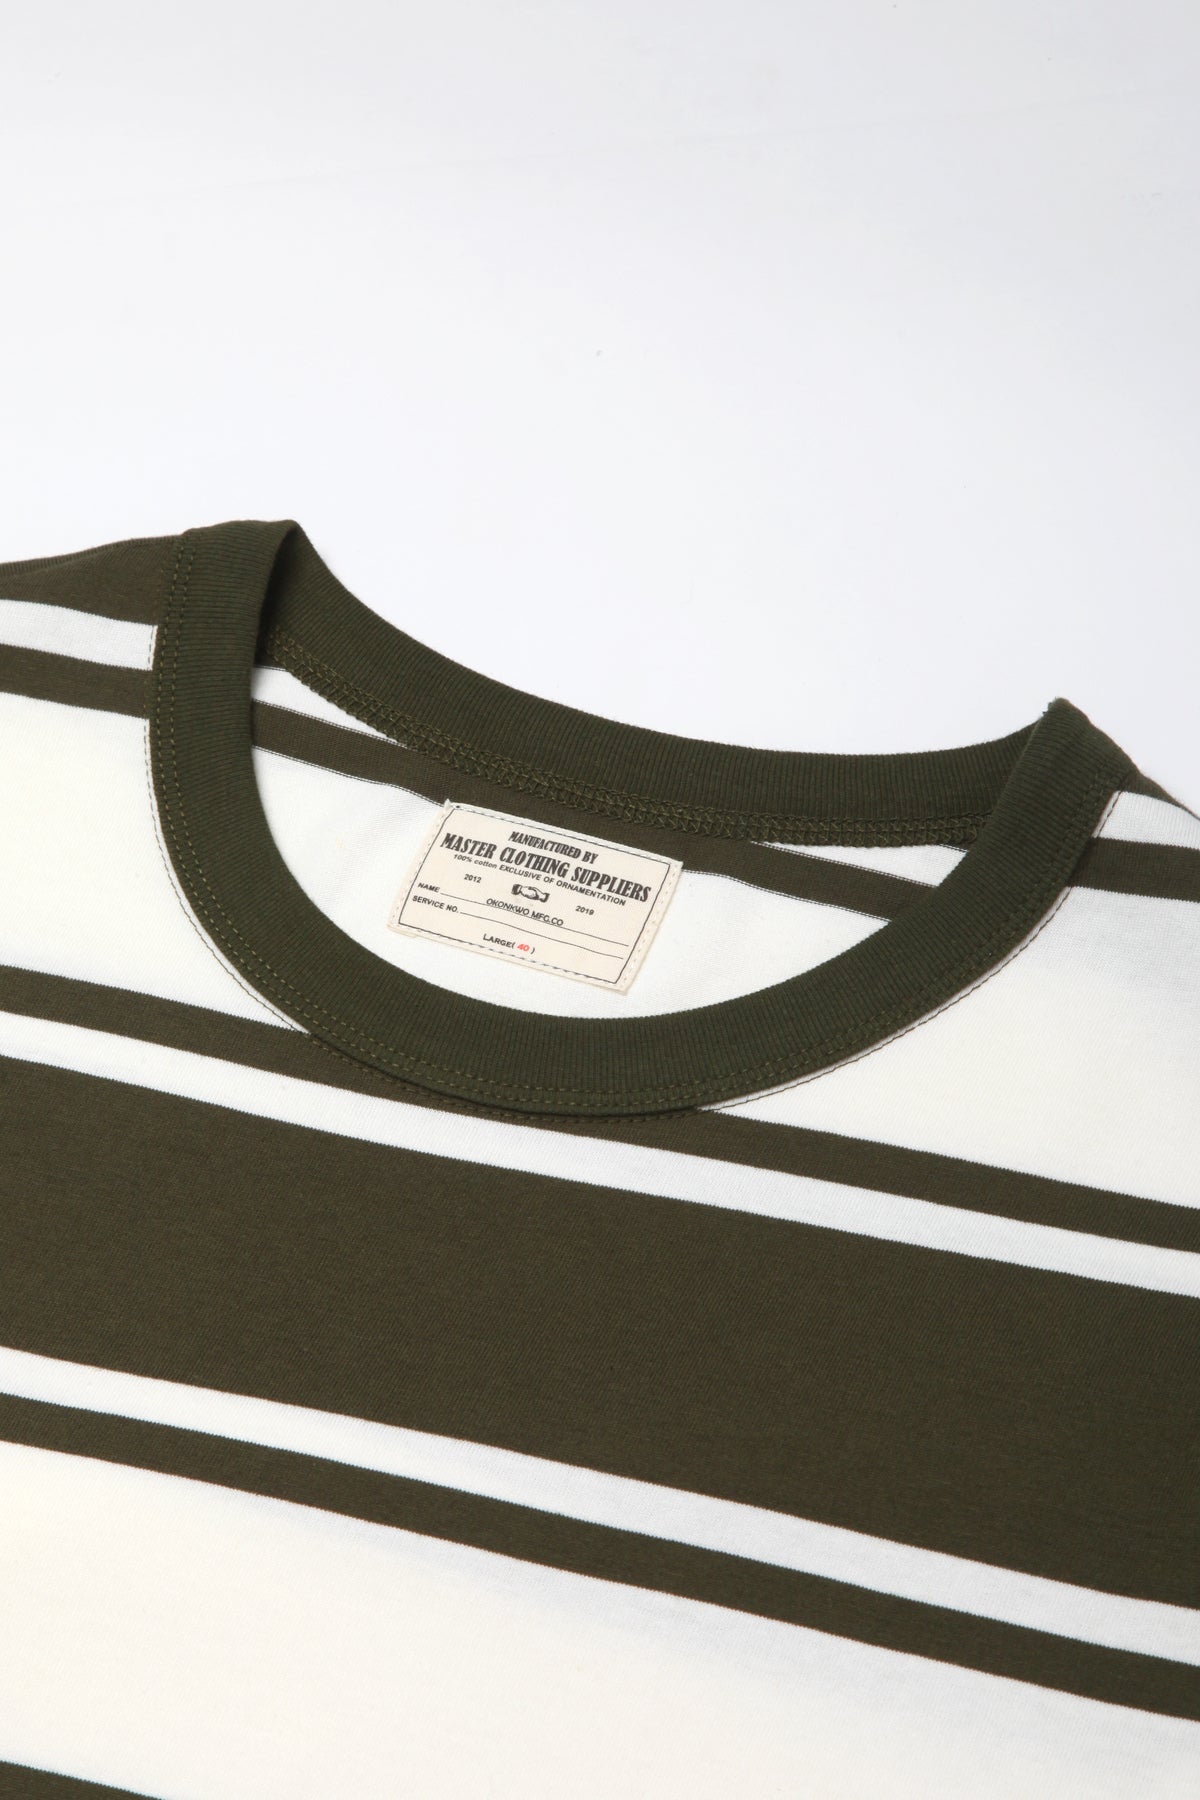 Okonkwo MFG - Short Sleeve Striped Tee - Olive/White